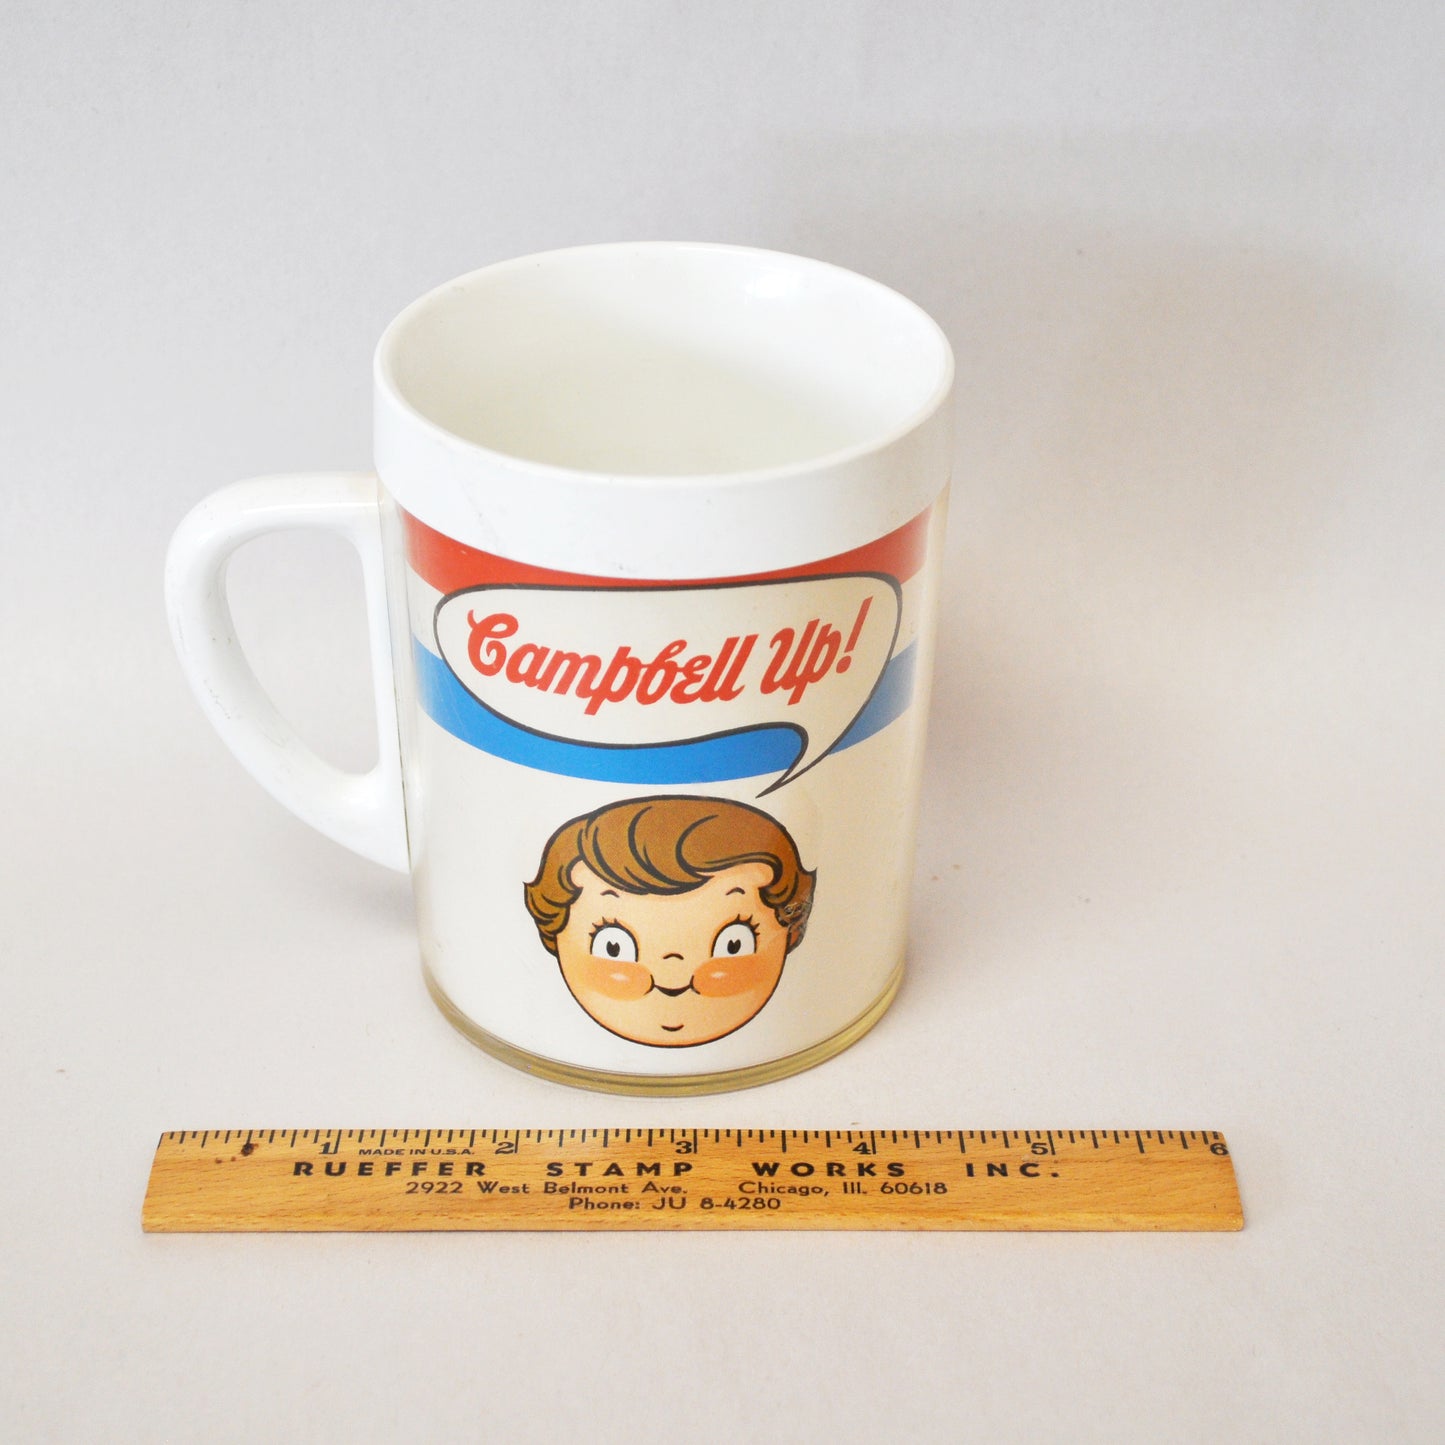 Vintage Campbells Mug